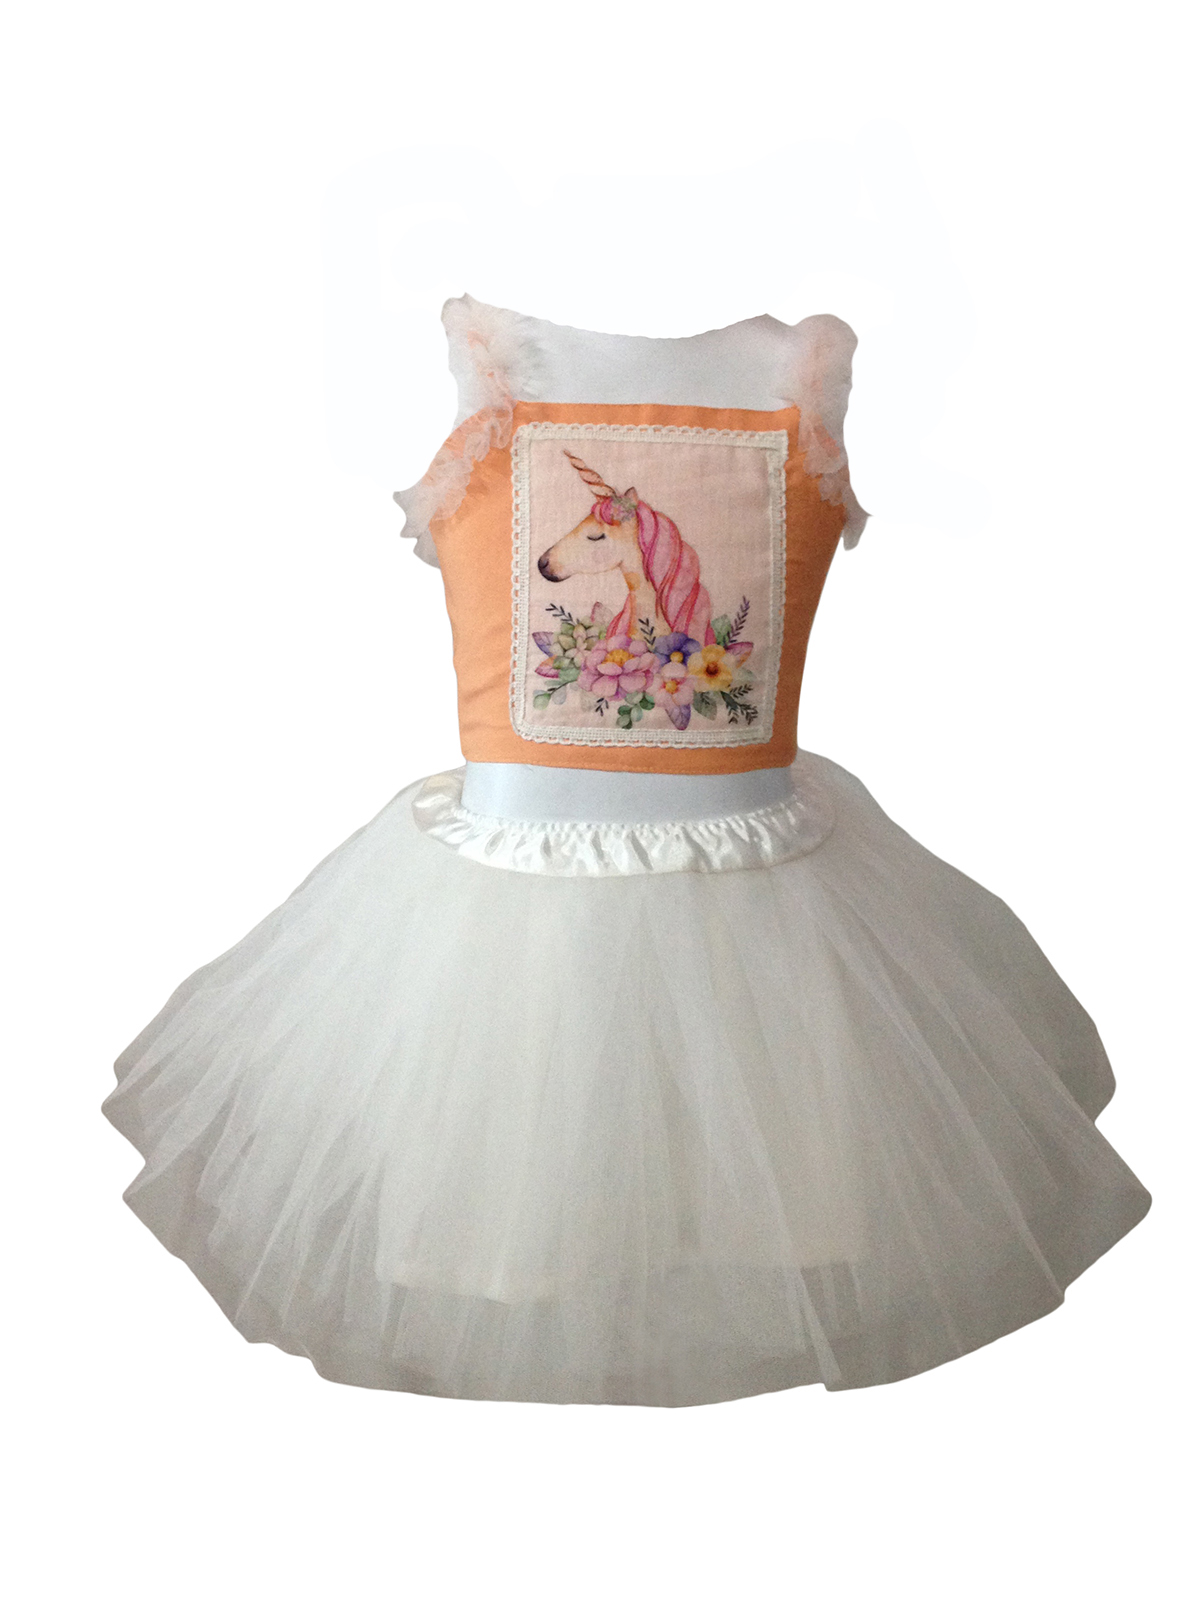 Starburst FLO GREEN Child Small Dance Costume Ballet Tutu Tap Dress  Dancewear  Full On Cinema